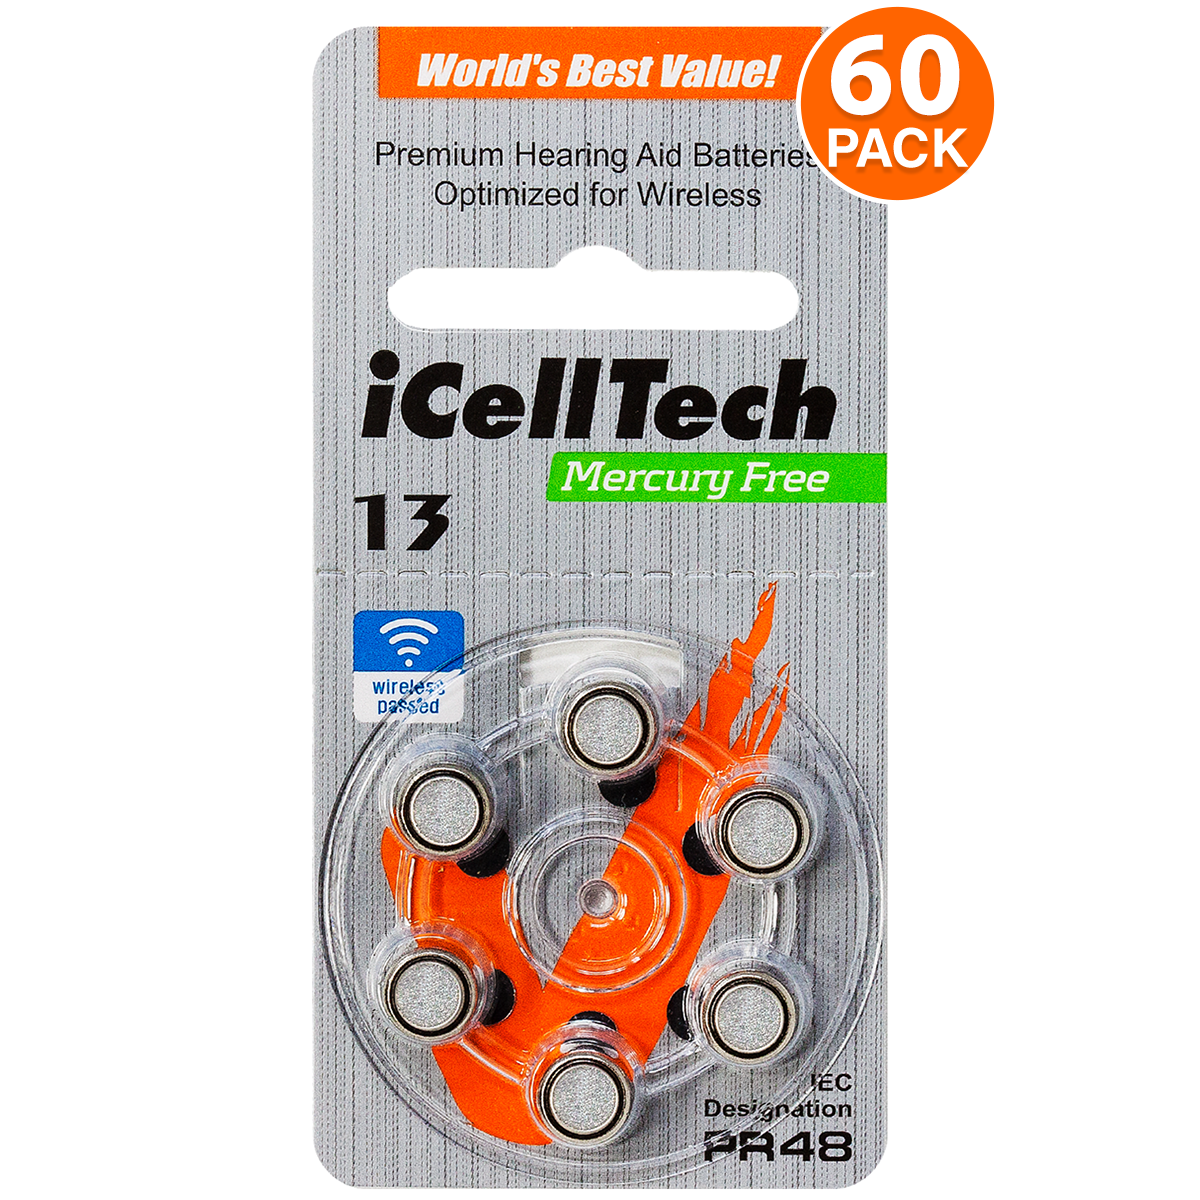 Icelltech Size 13 Pr48 P13 Mf Zinc Air Hearing Aid Batteries (60 Pack)